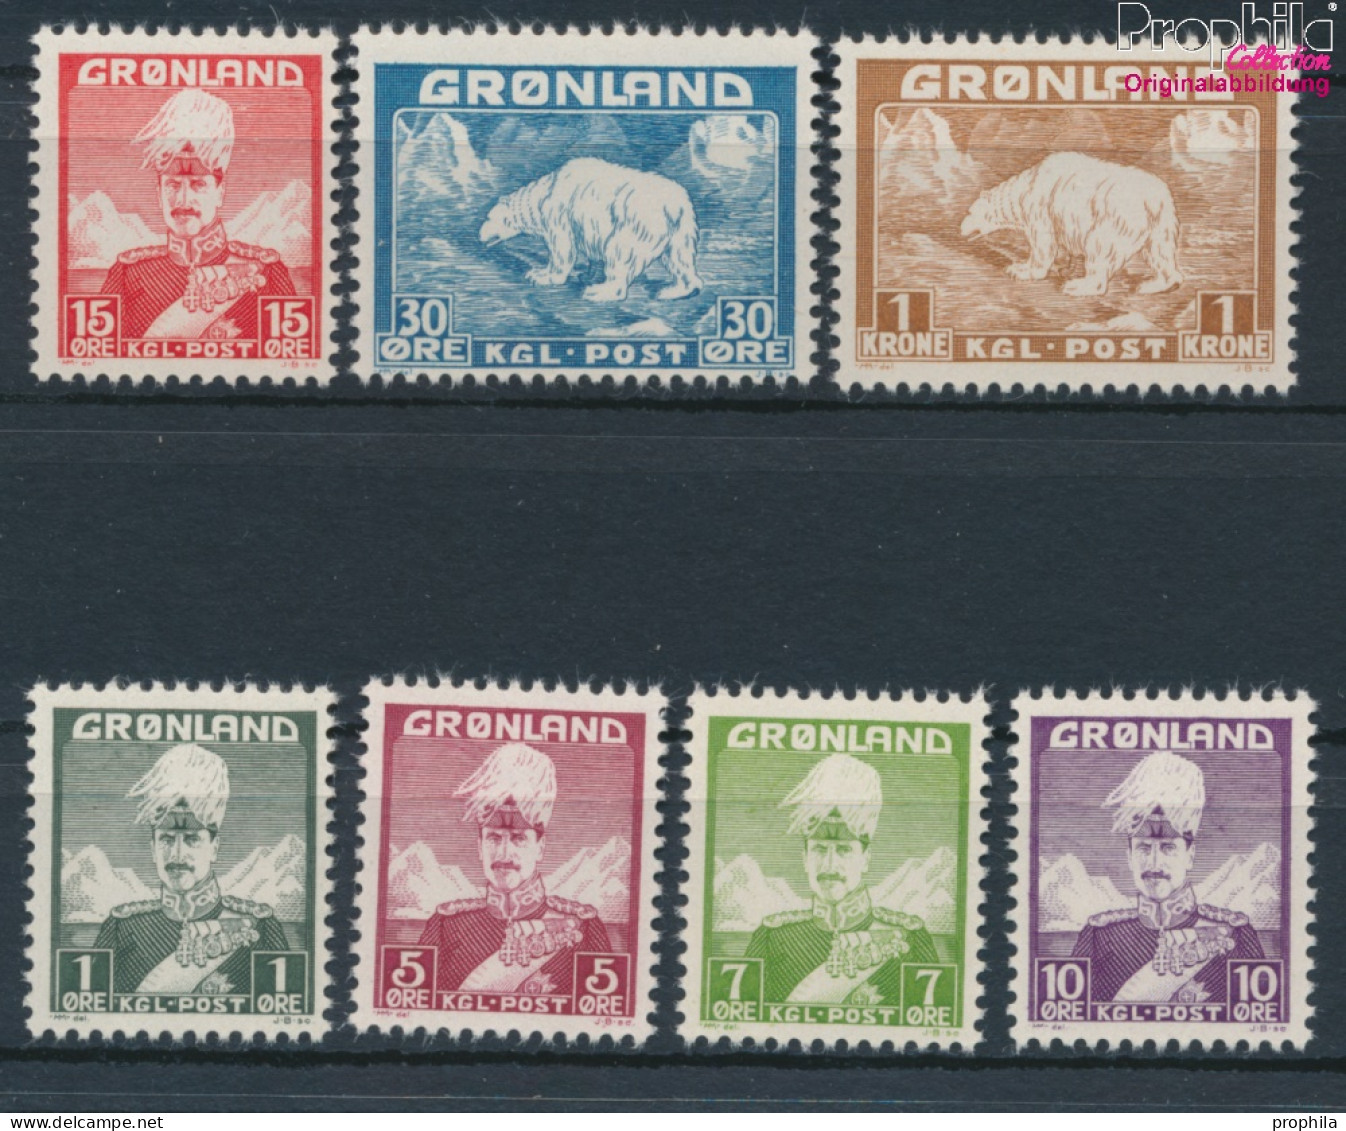 Dänemark - Grönland Postfrisch Christian X. 1938 König Christian X.  (10174221 - Gebraucht